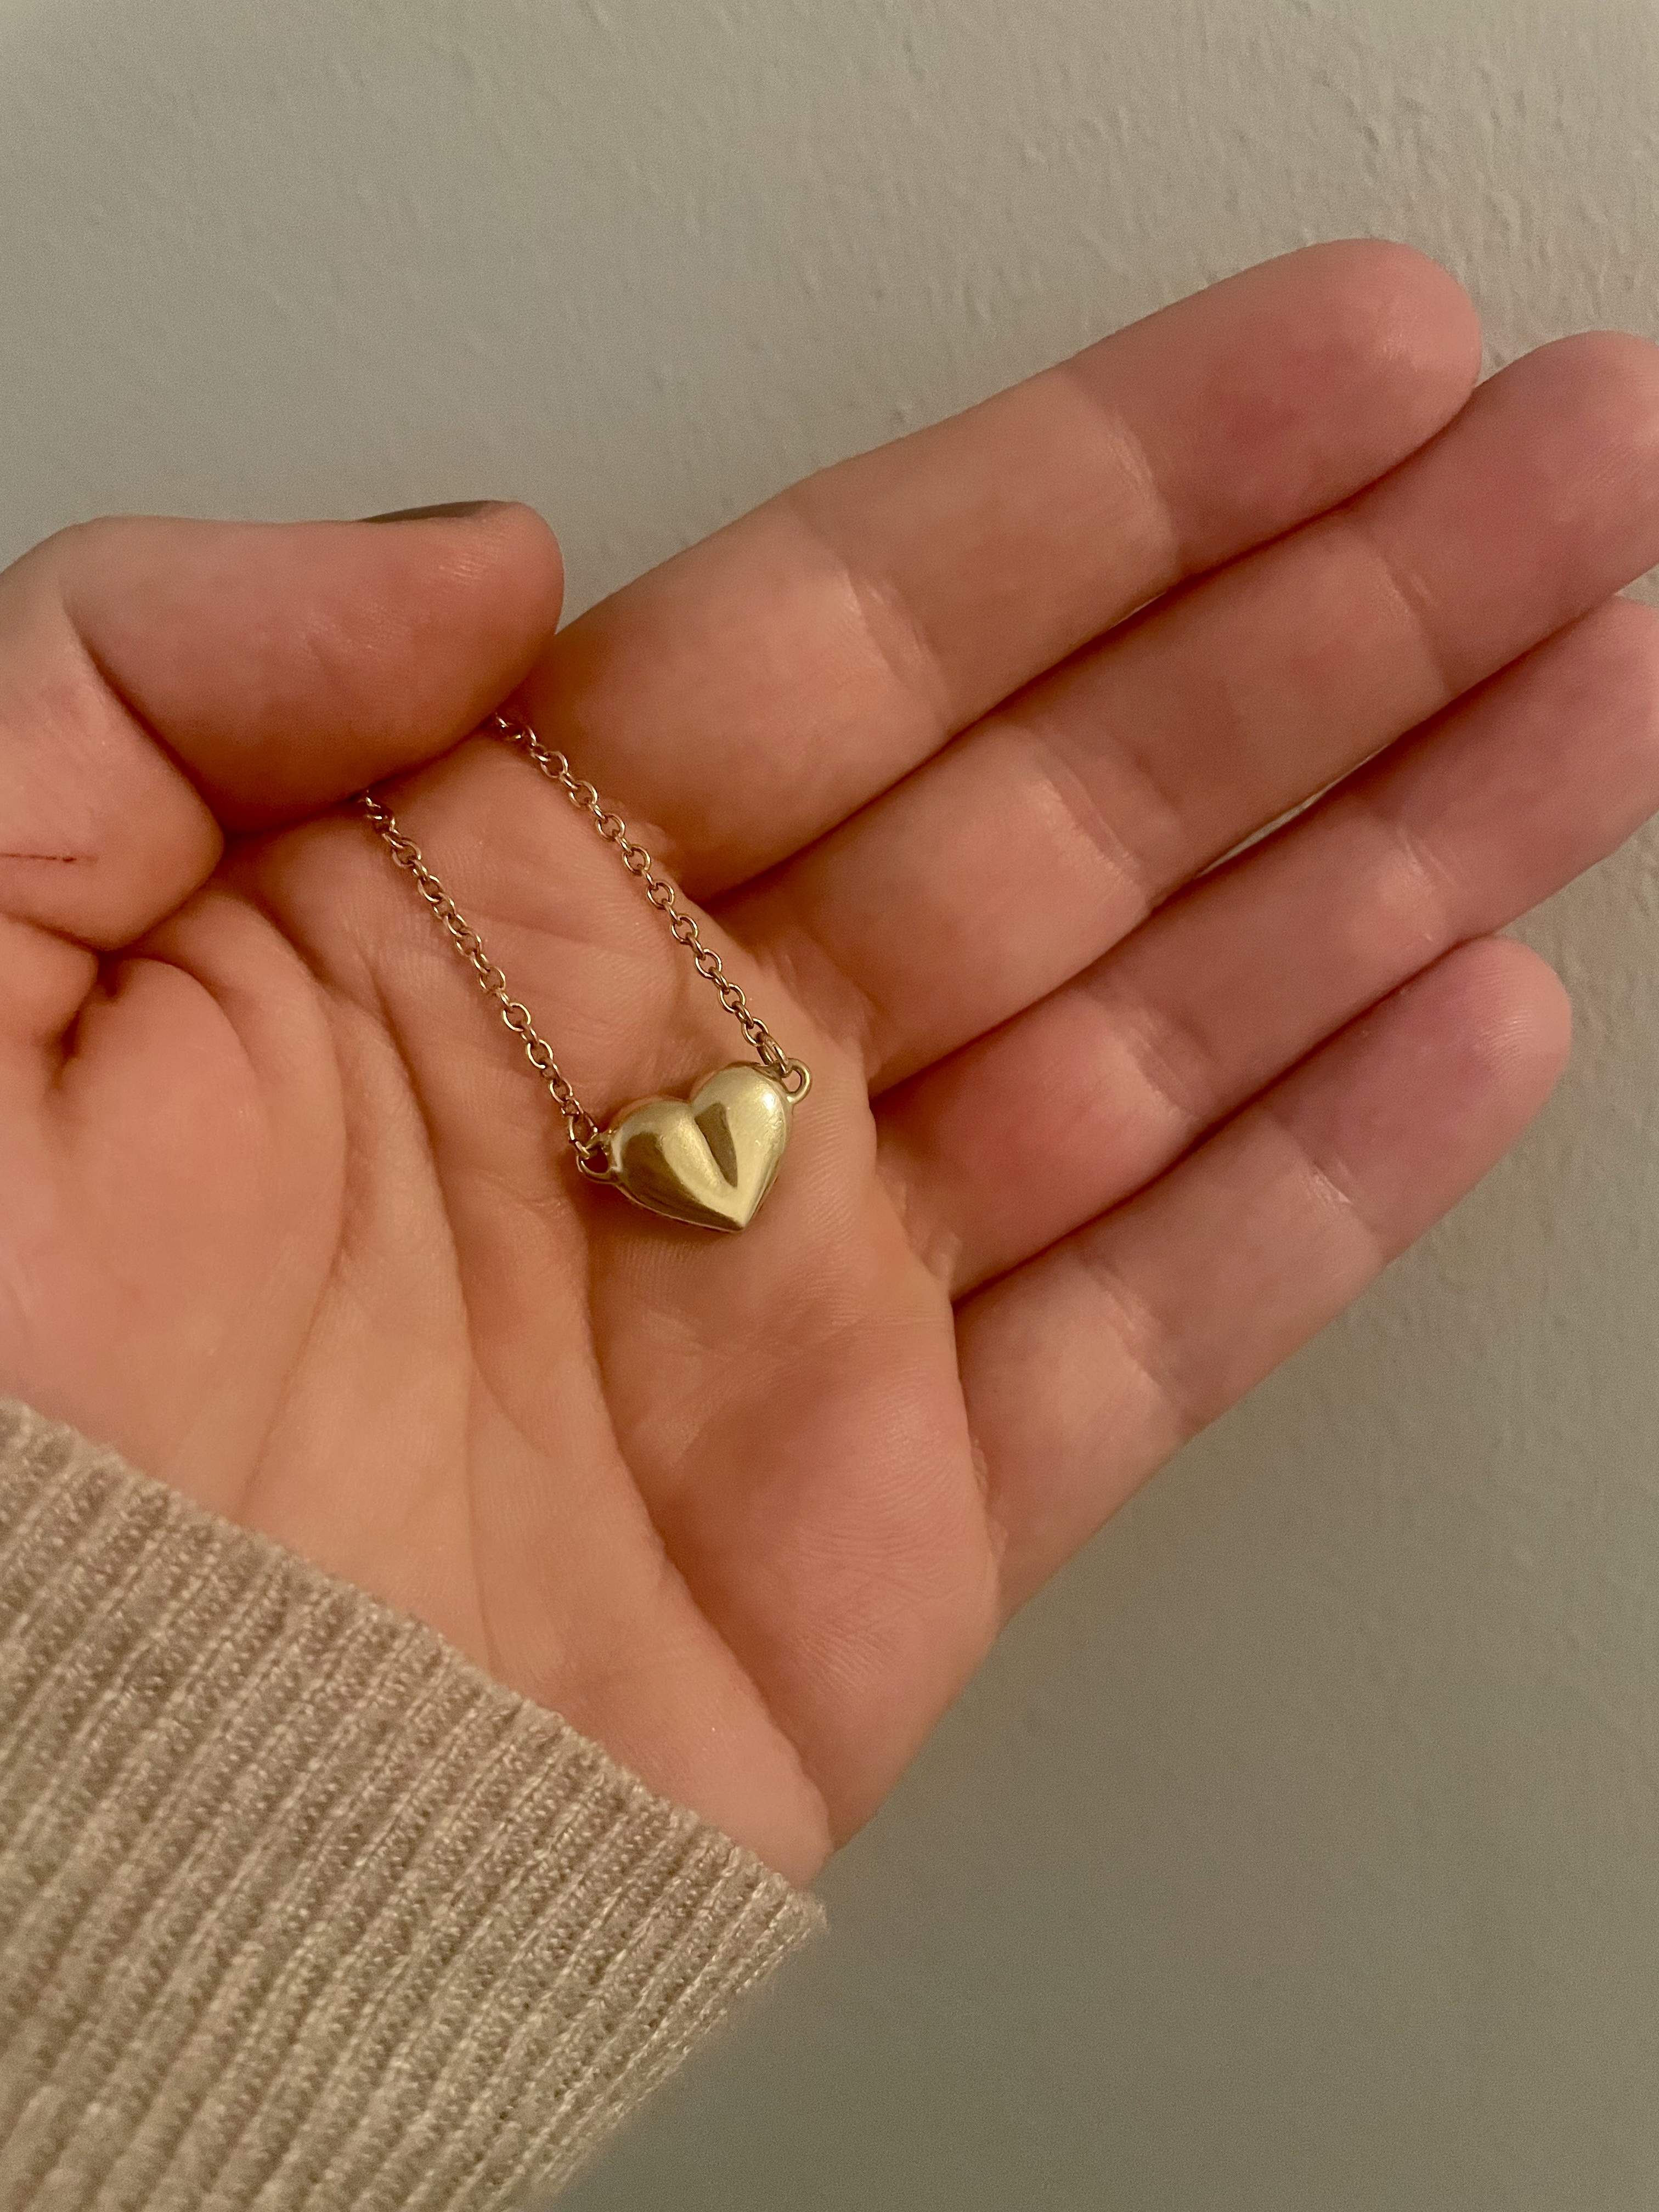 Heart pendant on chain